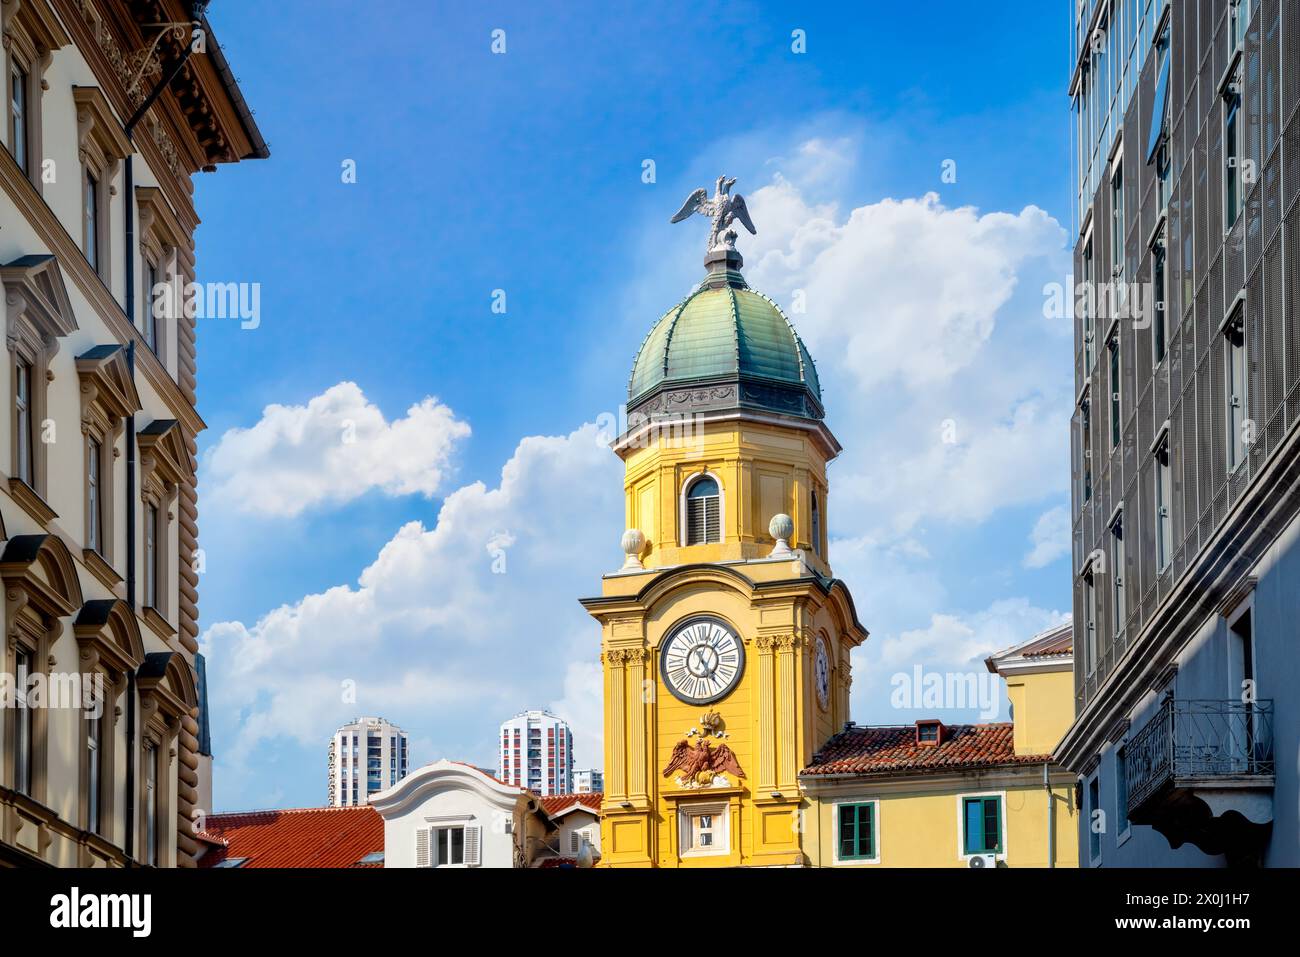 View to the Two-headed clock tower in Rieka, Croatia Stock Photo